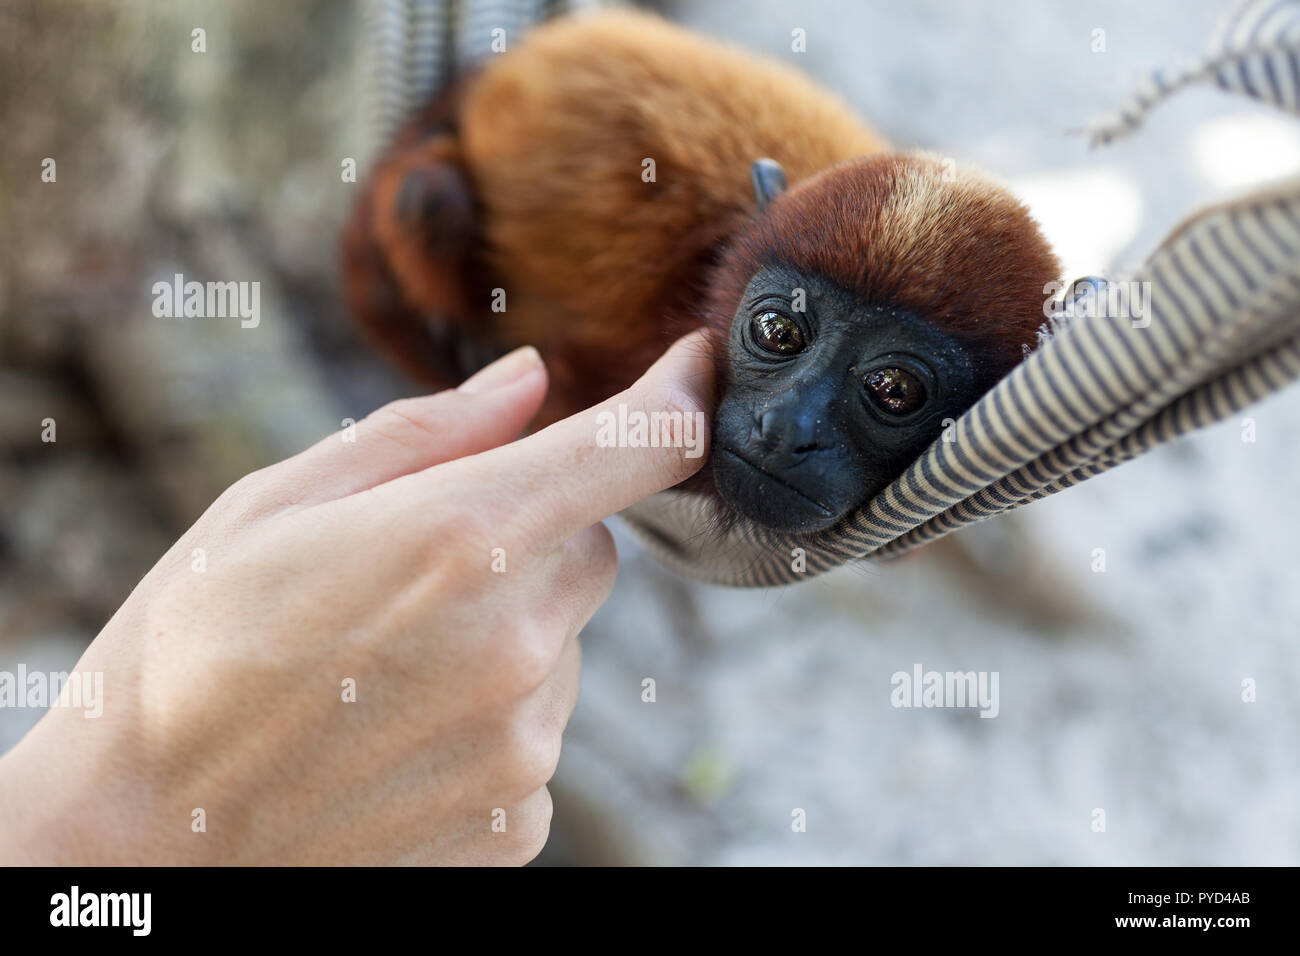 Rainforest animal amazon monkey hi-res stock photography and images - Page  2 - Alamy